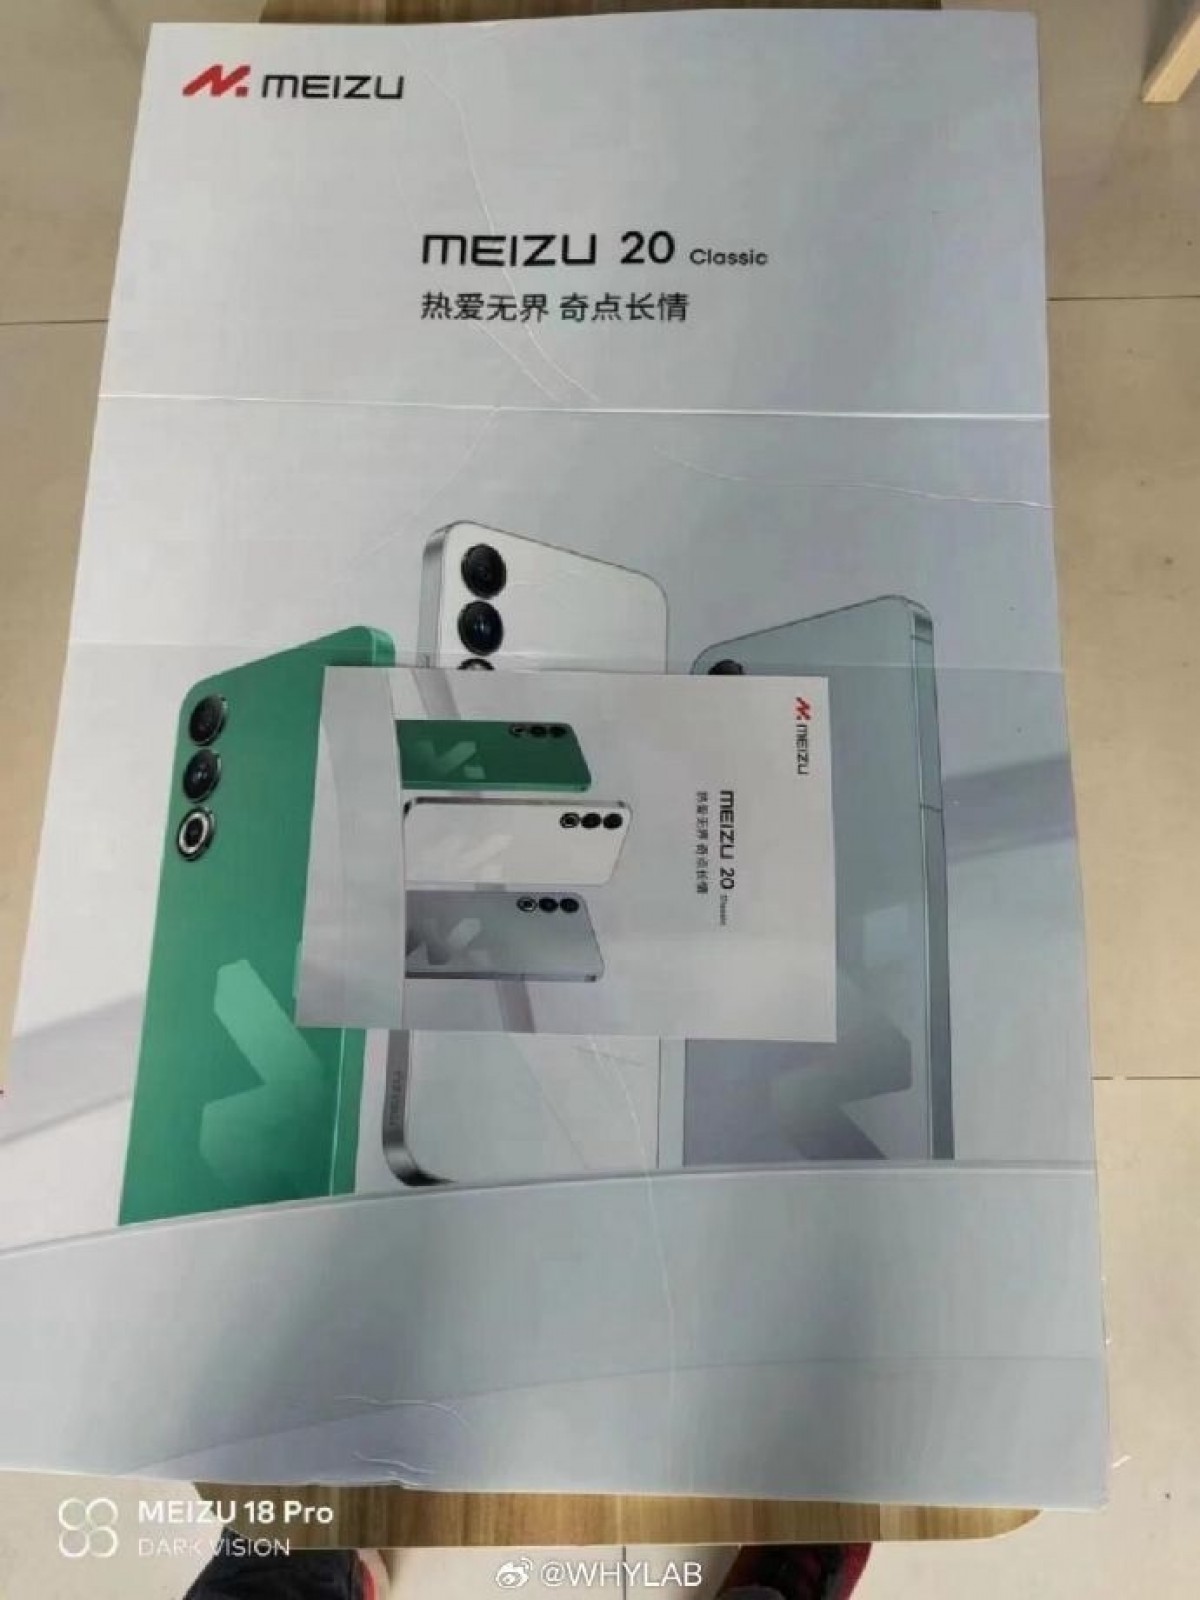 Meizu 20 Classic promo materials